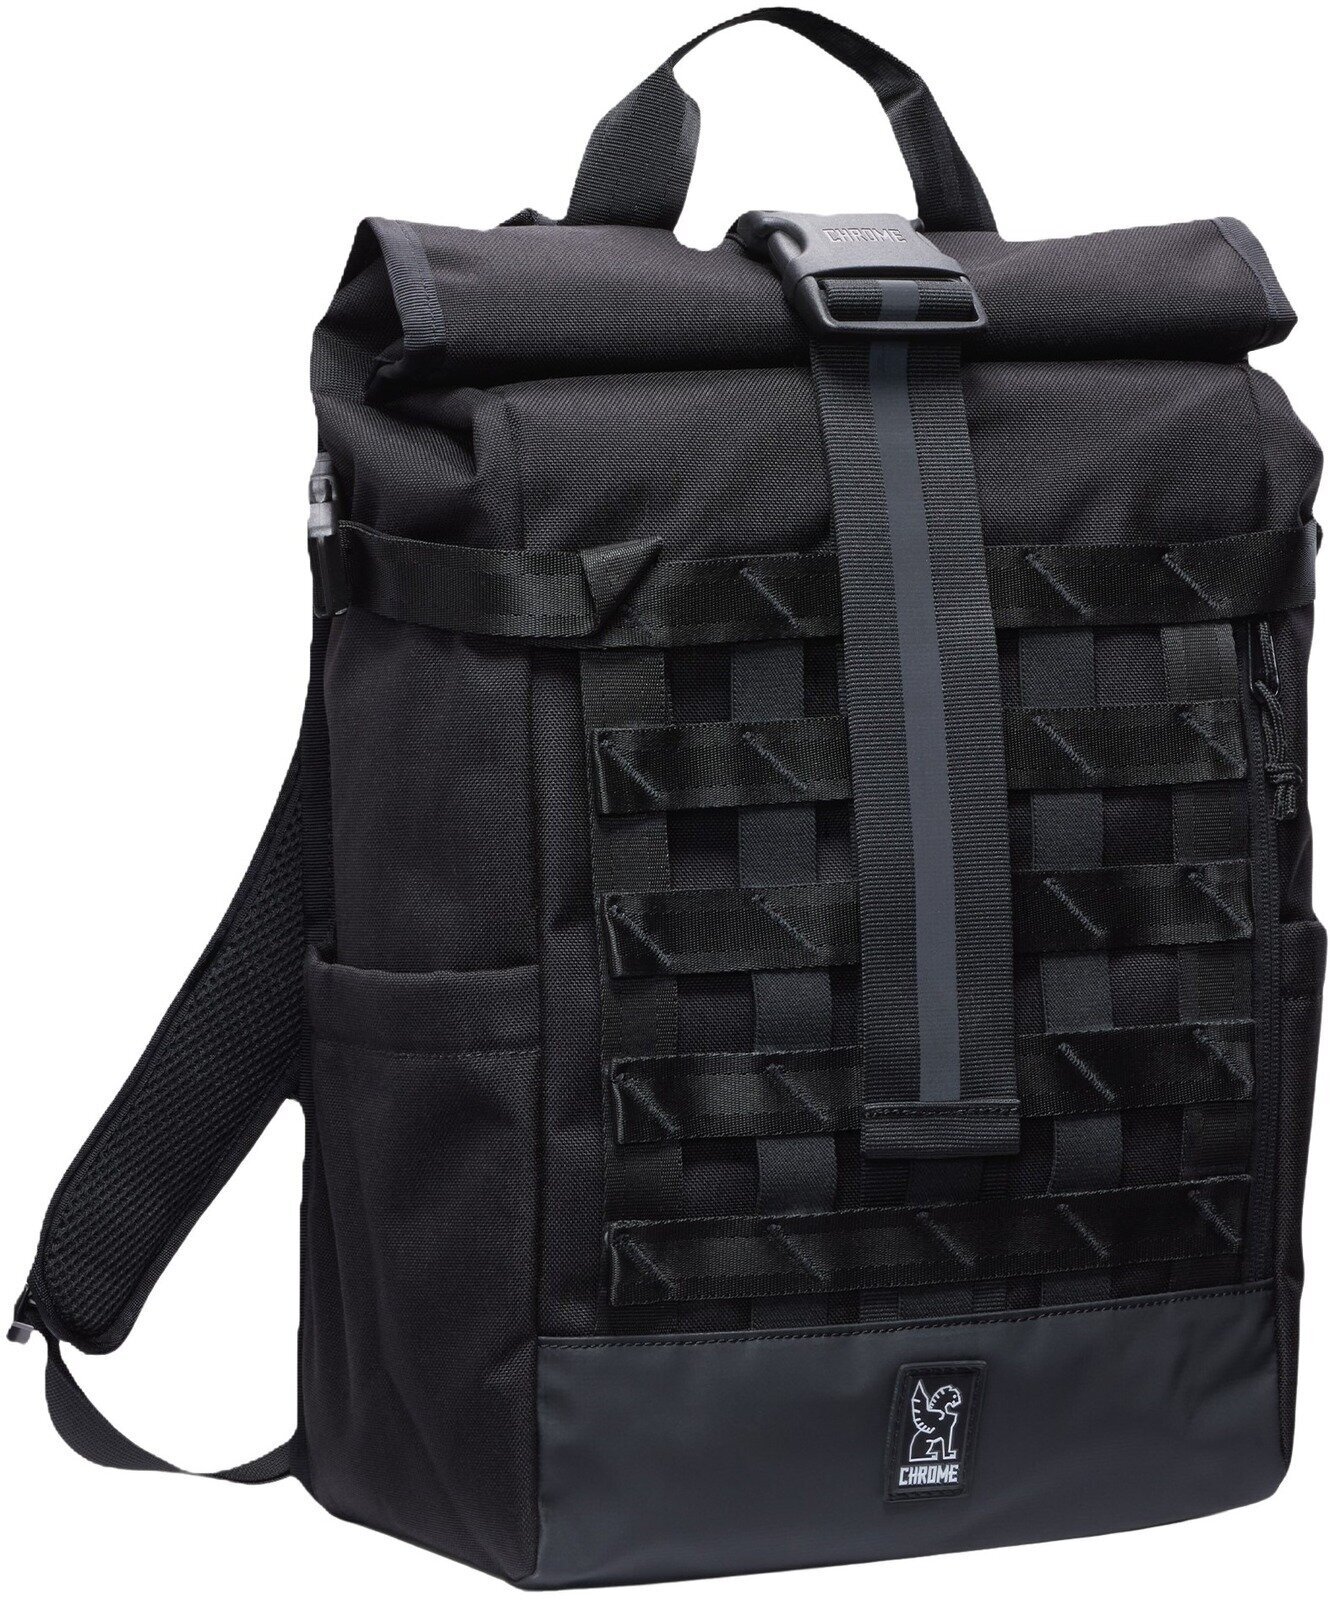 Lifestyle Rucksäck / Tasche Chrome Barrage Backpack Black 18 L Rucksack